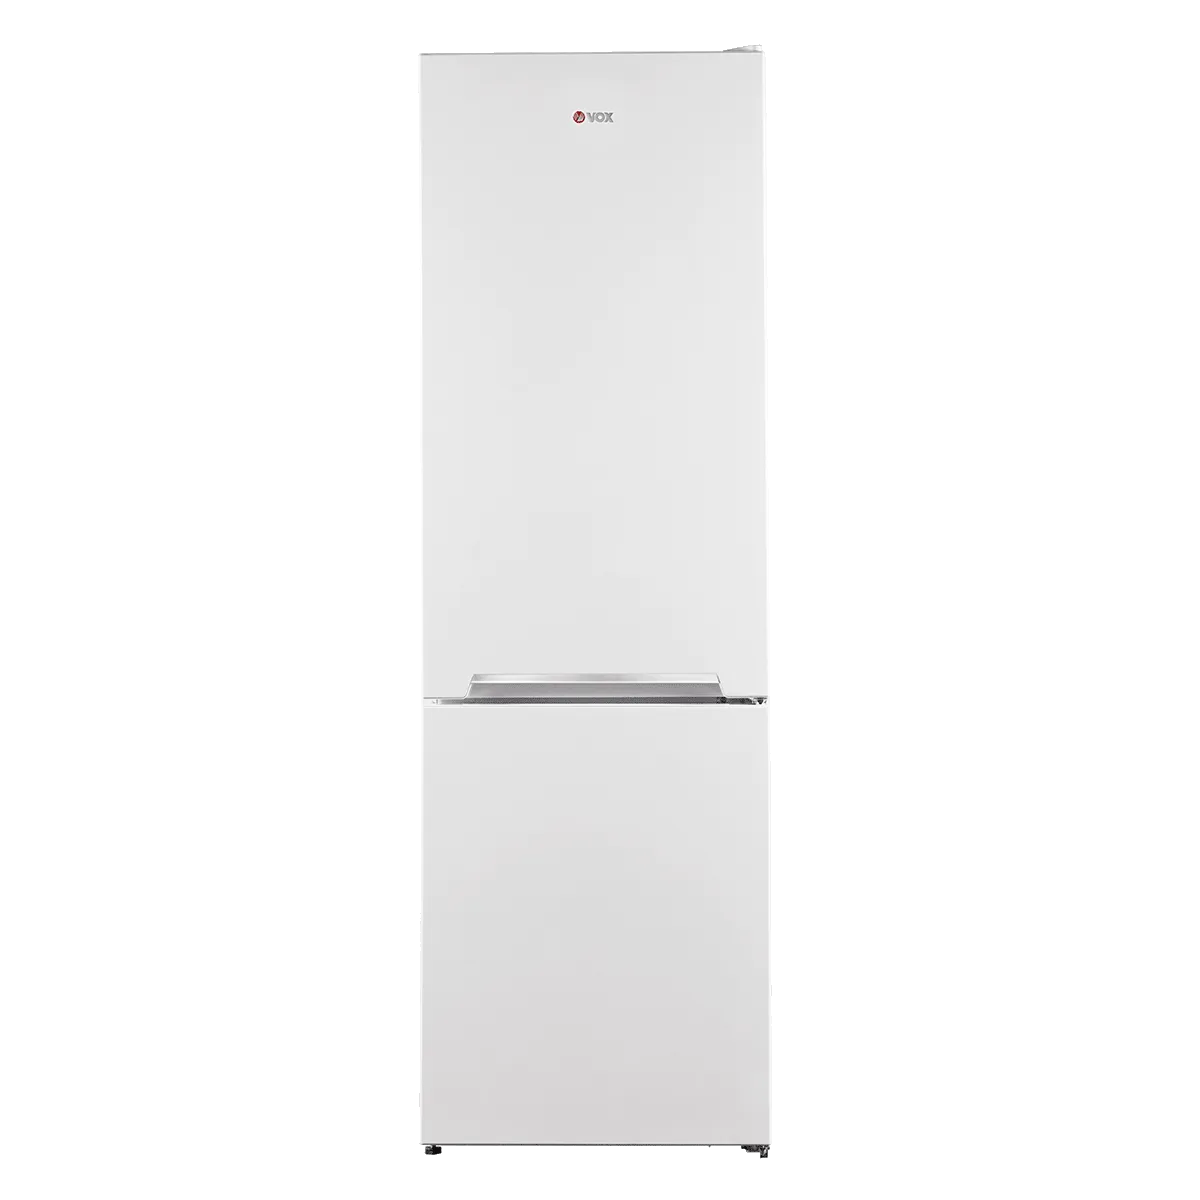 Комбиниран фрижидер КК 3300 F 